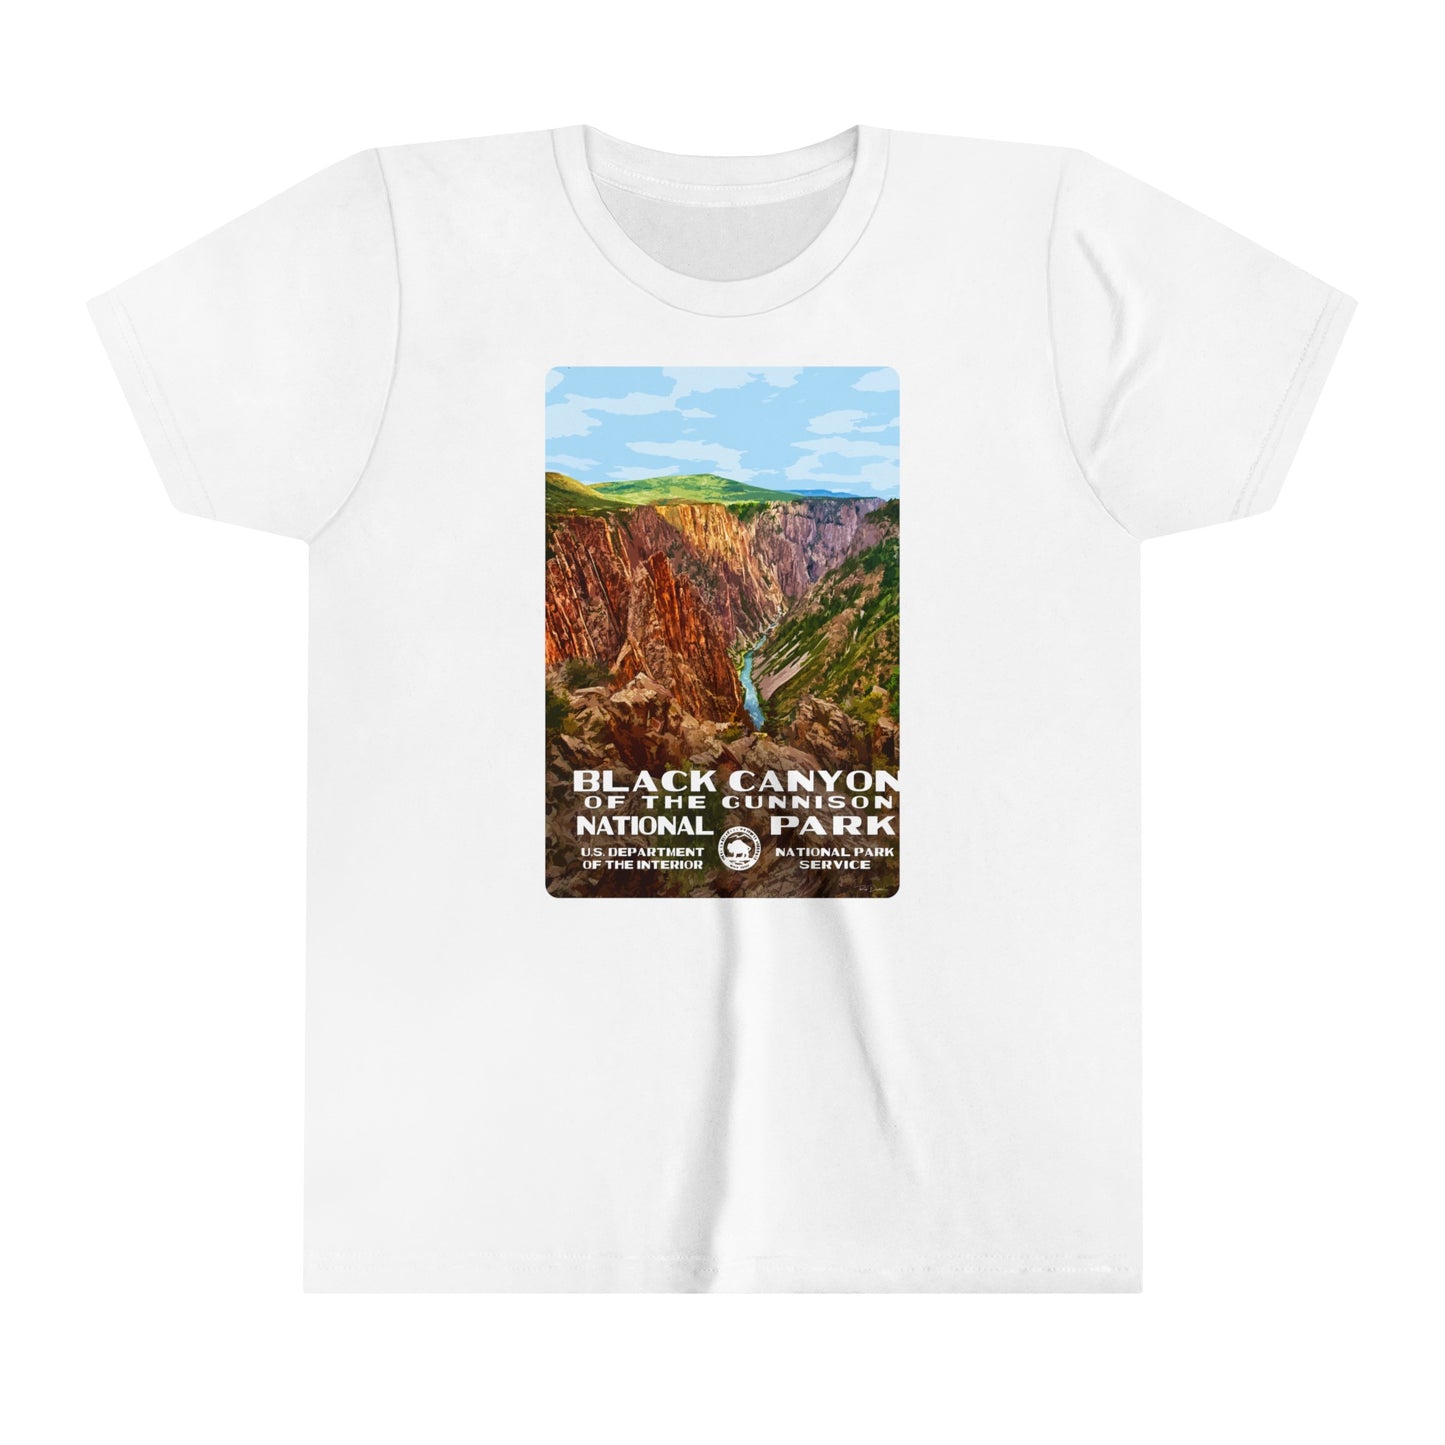 Black Canyon of the Gunnison National Park Kids' T-Shirt